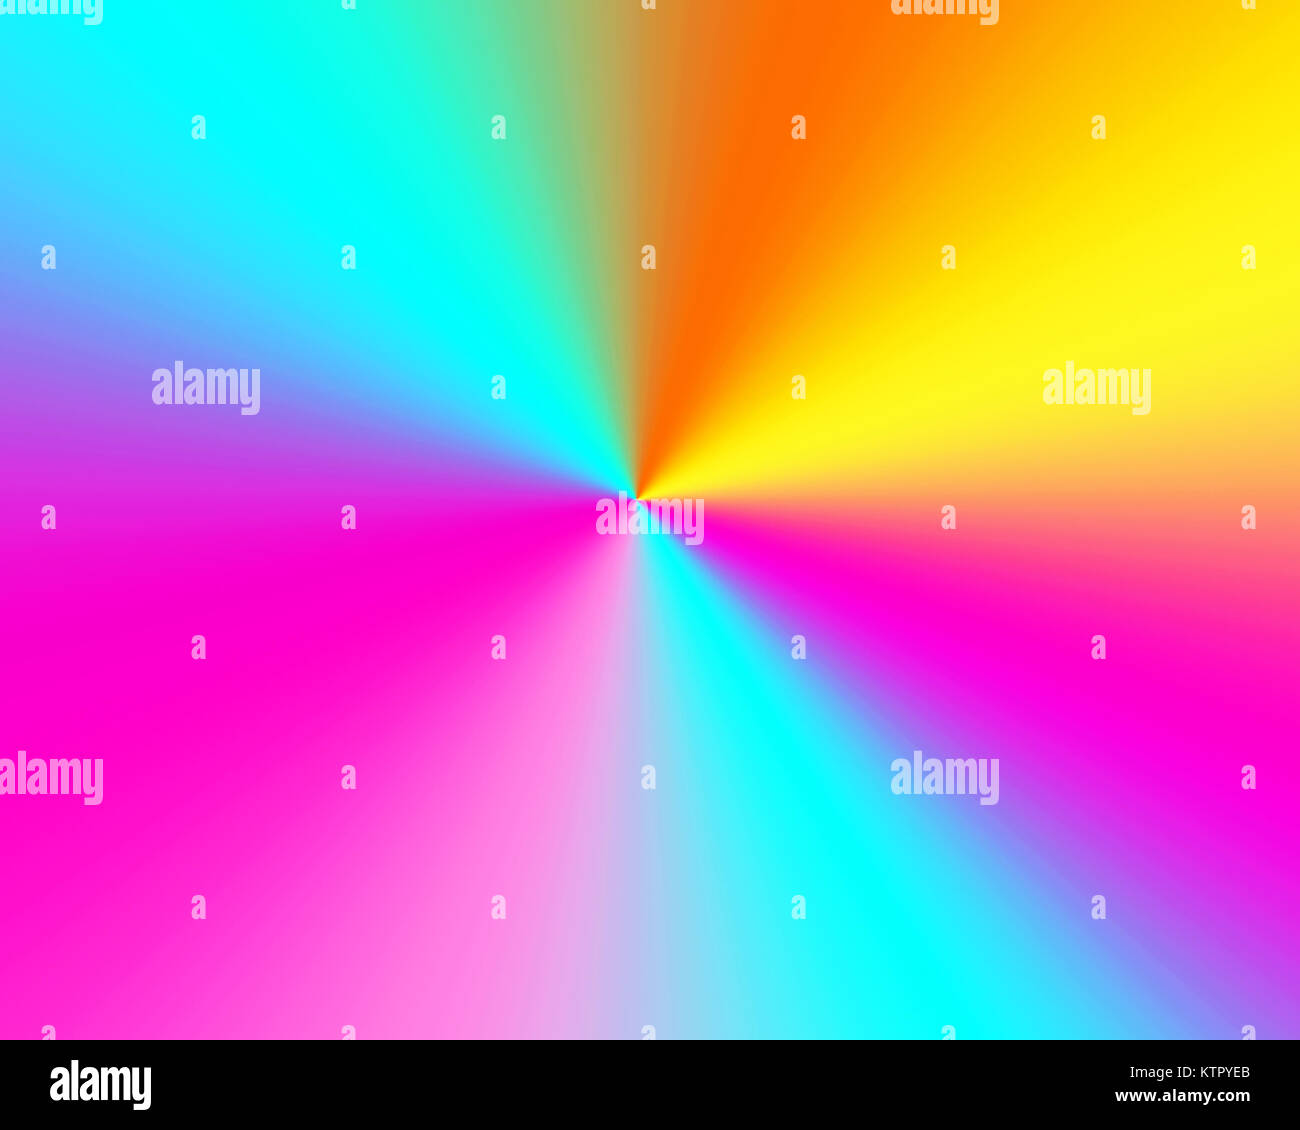 Background screen saver of vibrant rainbow colors Stock Photo